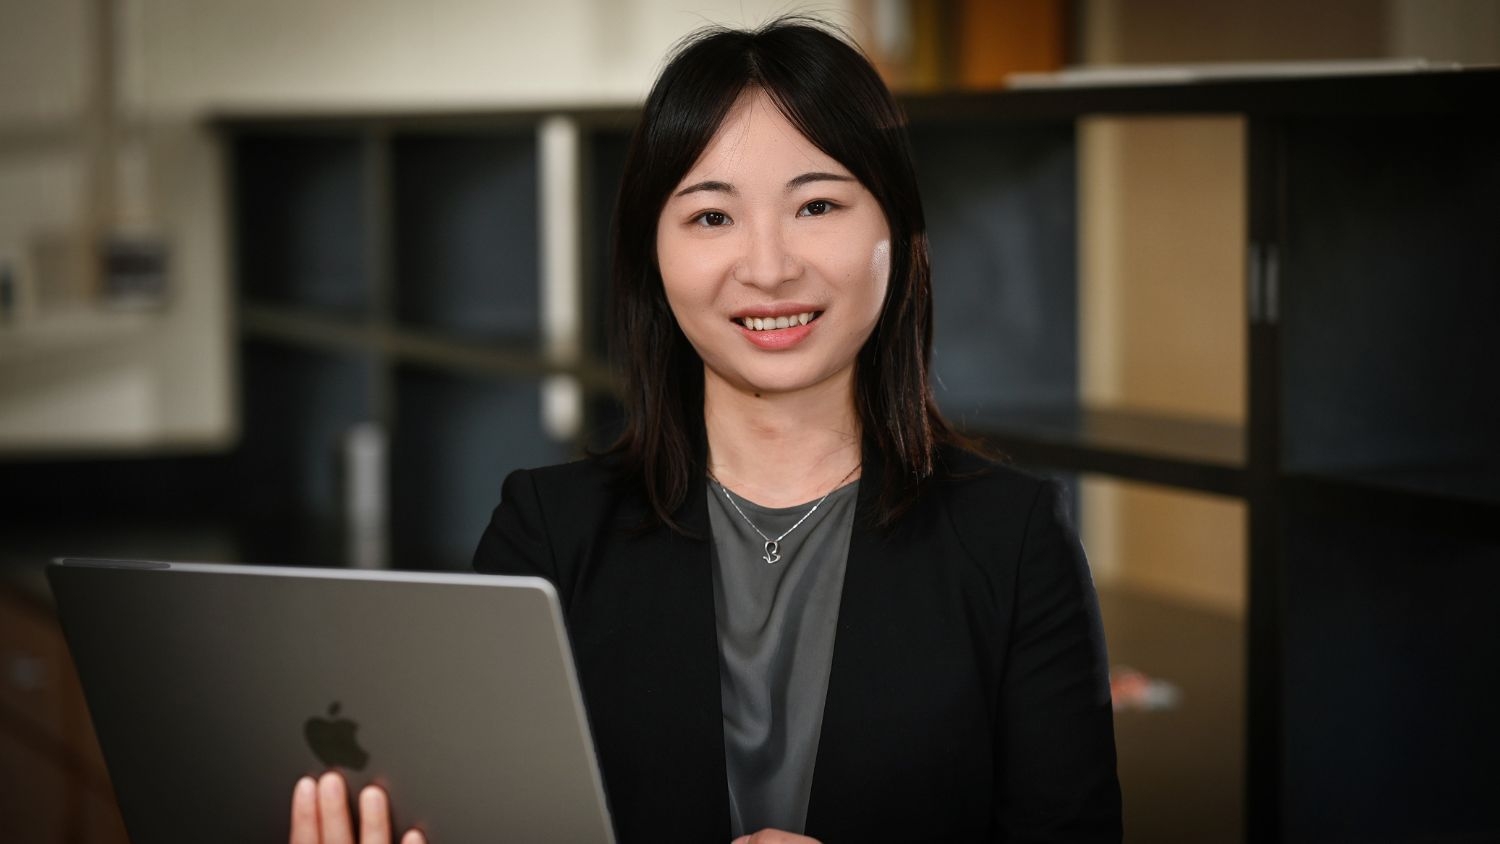 Minliang Yang holding a computer and smiling